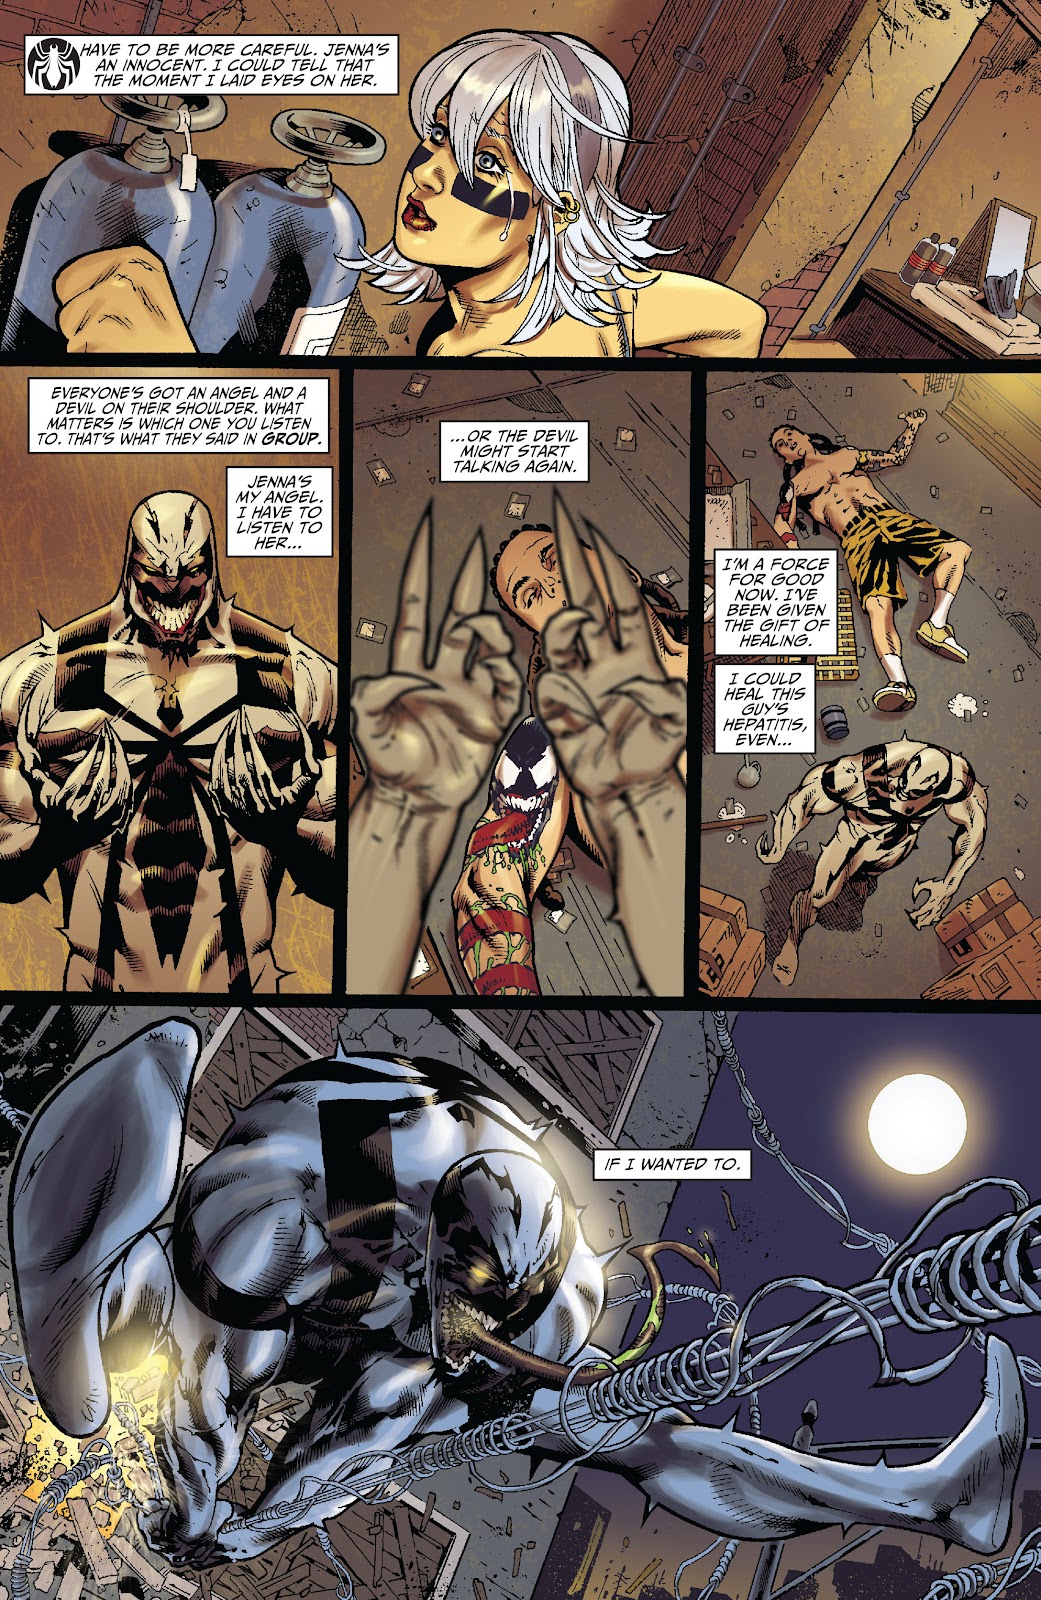 Amazing Spider-Man Presents: Anti-Venom - New Ways To Live issue 1 - Page 13